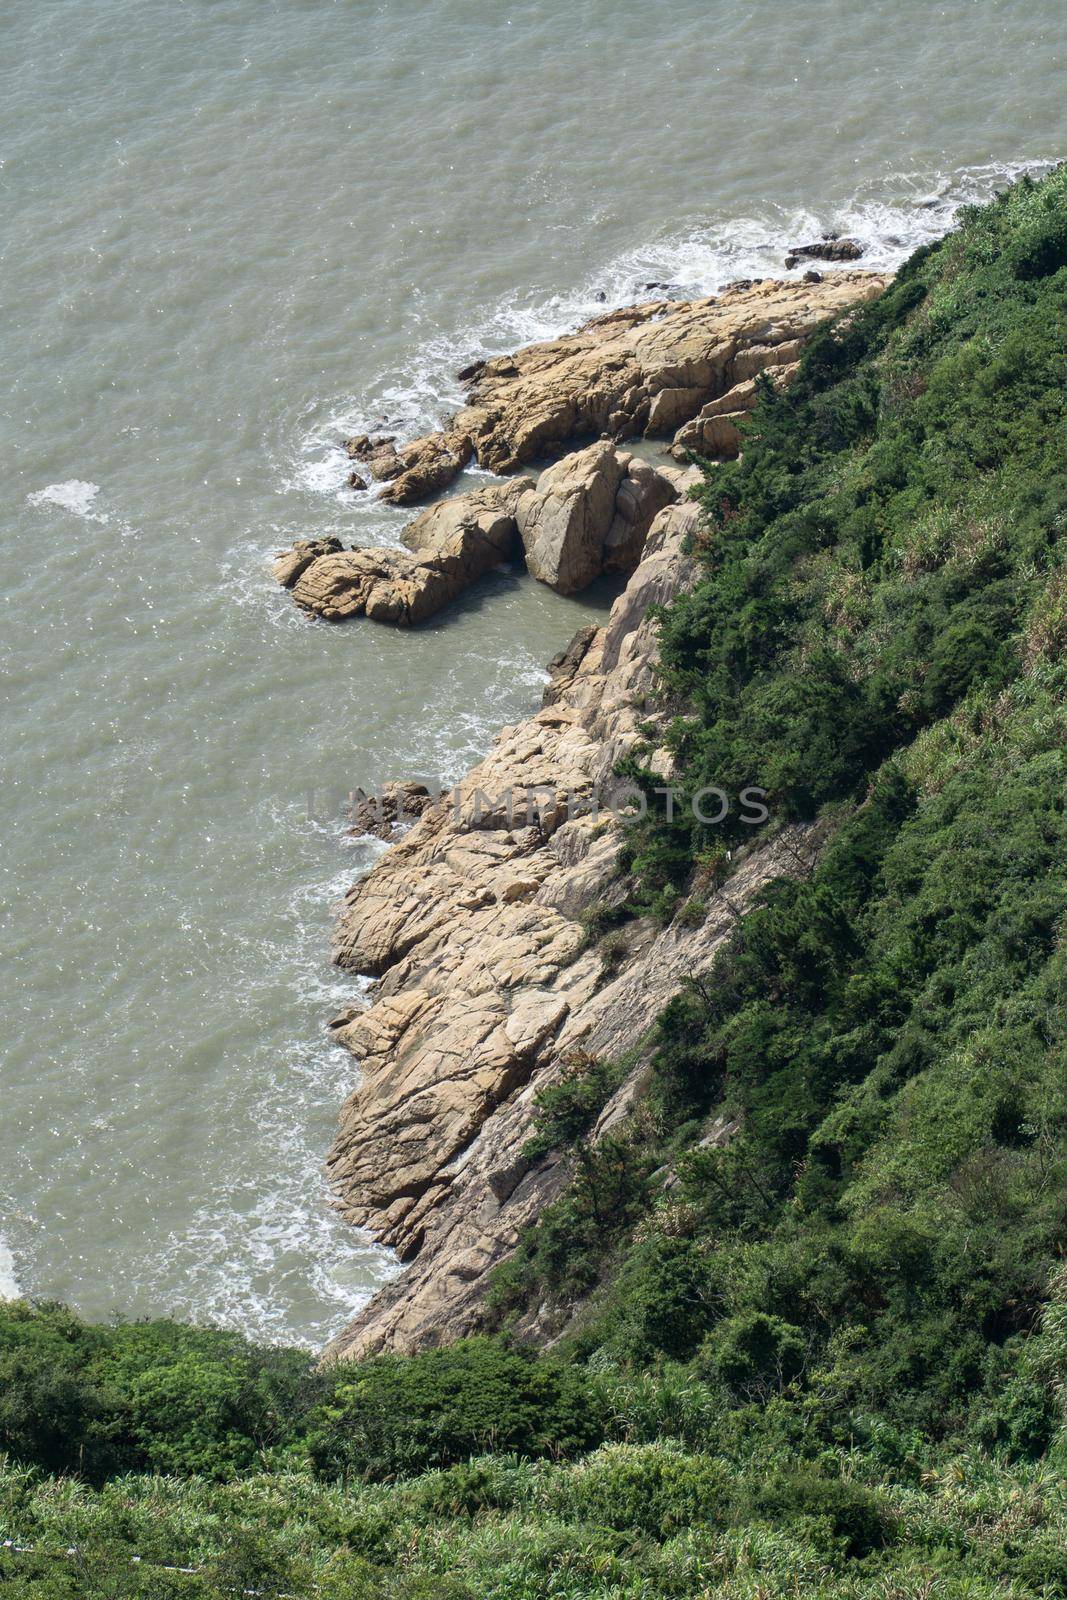 Spindrift and rocks by the sea, photo in Taizhou, Zhejiang, China.